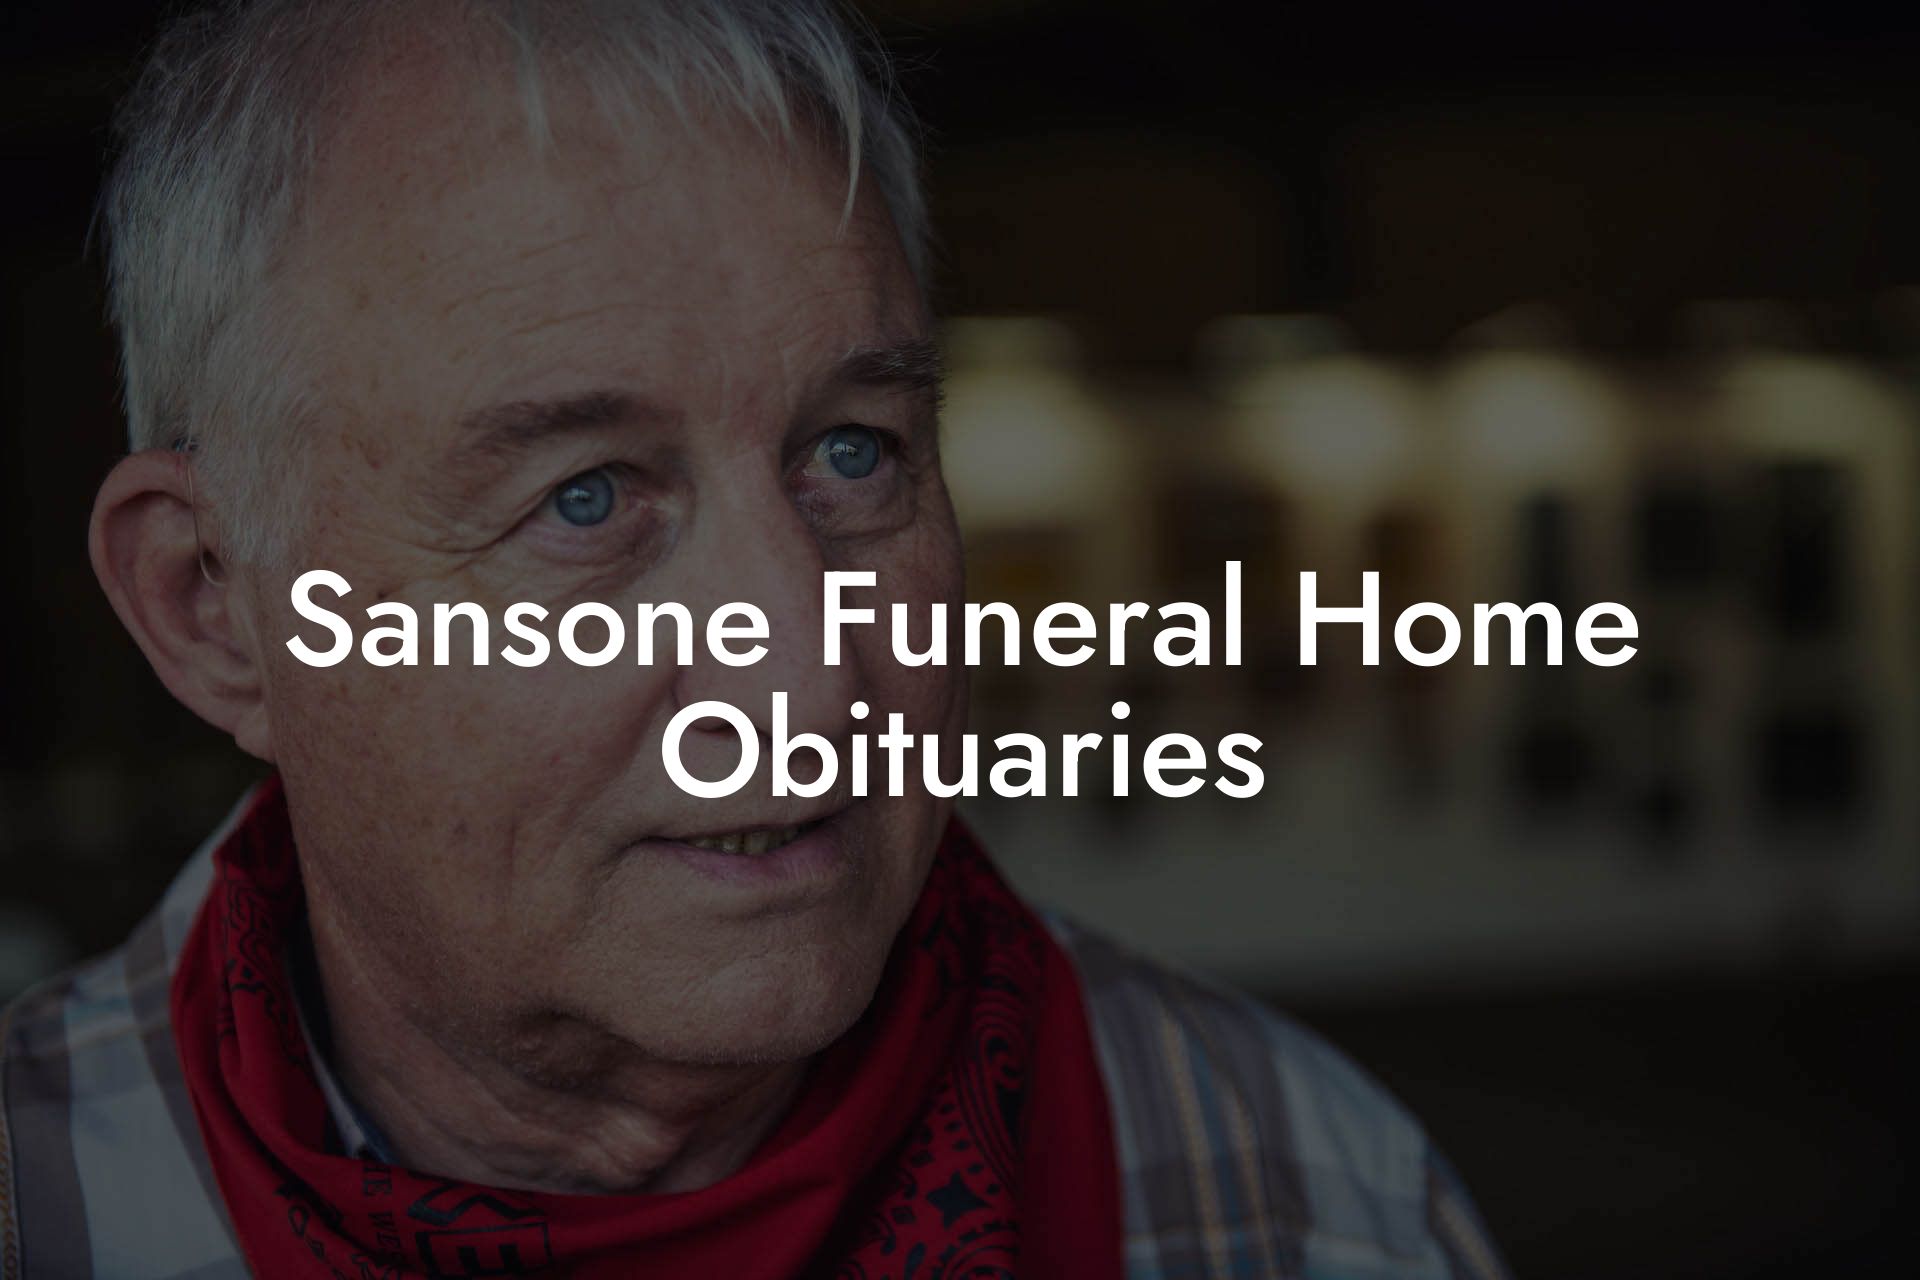 Sansone Funeral Home Obituaries